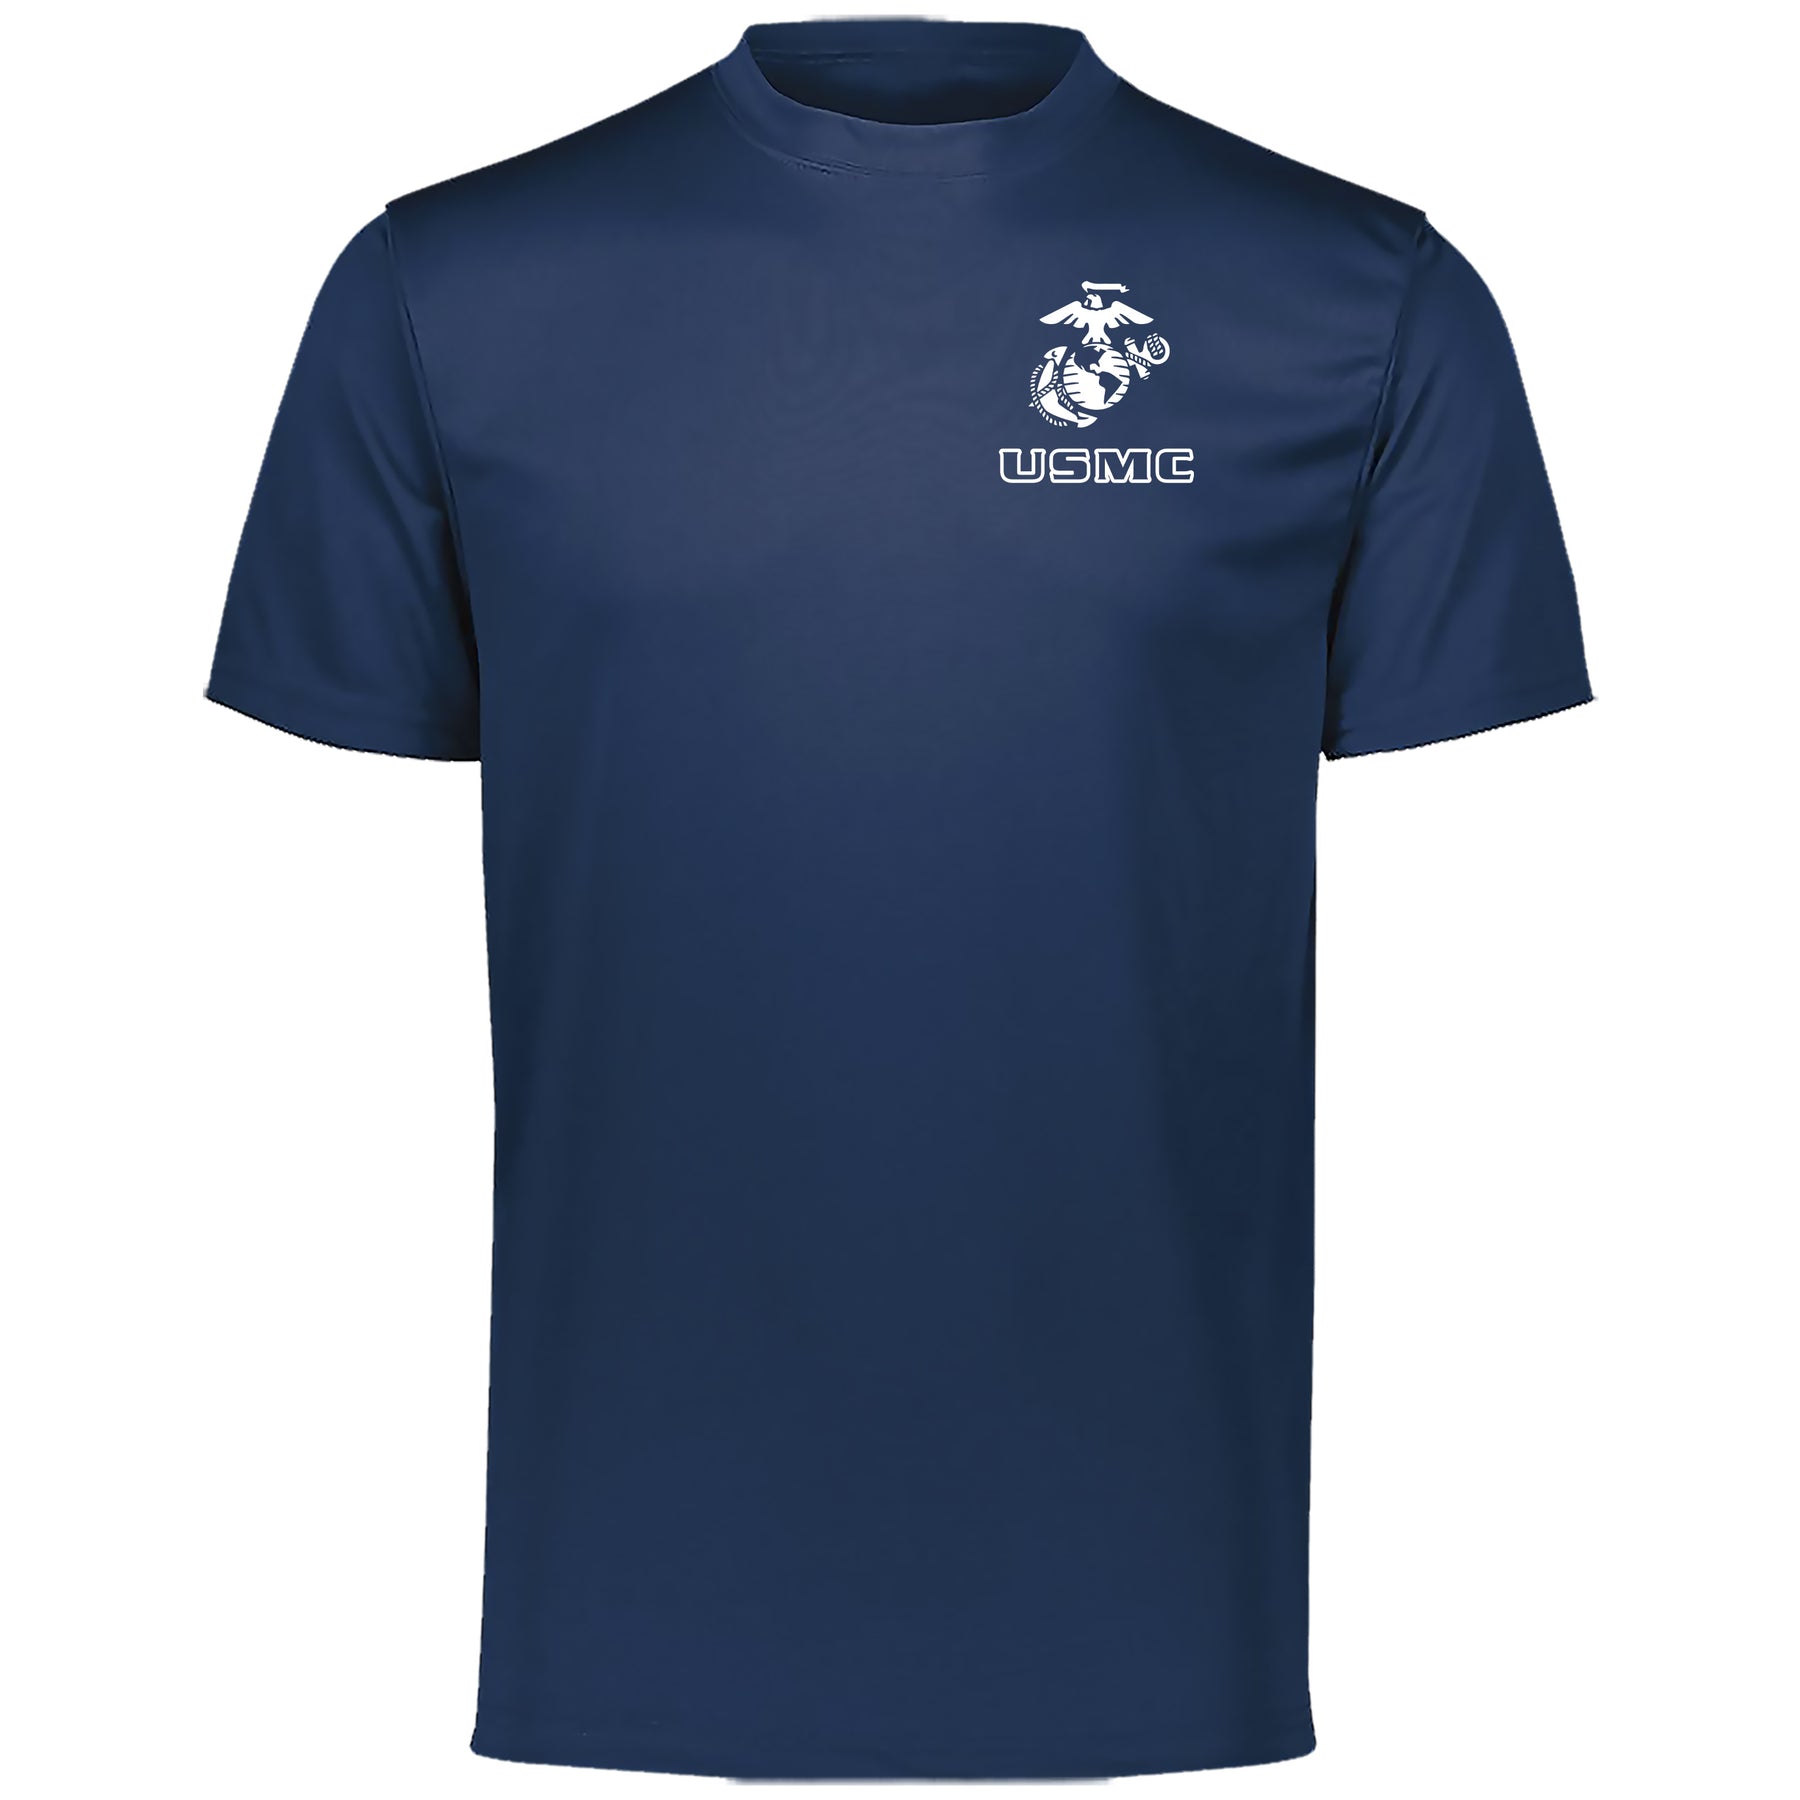 EGA Over USMC Chest Seal Dri-Fit Performance T-Shirt